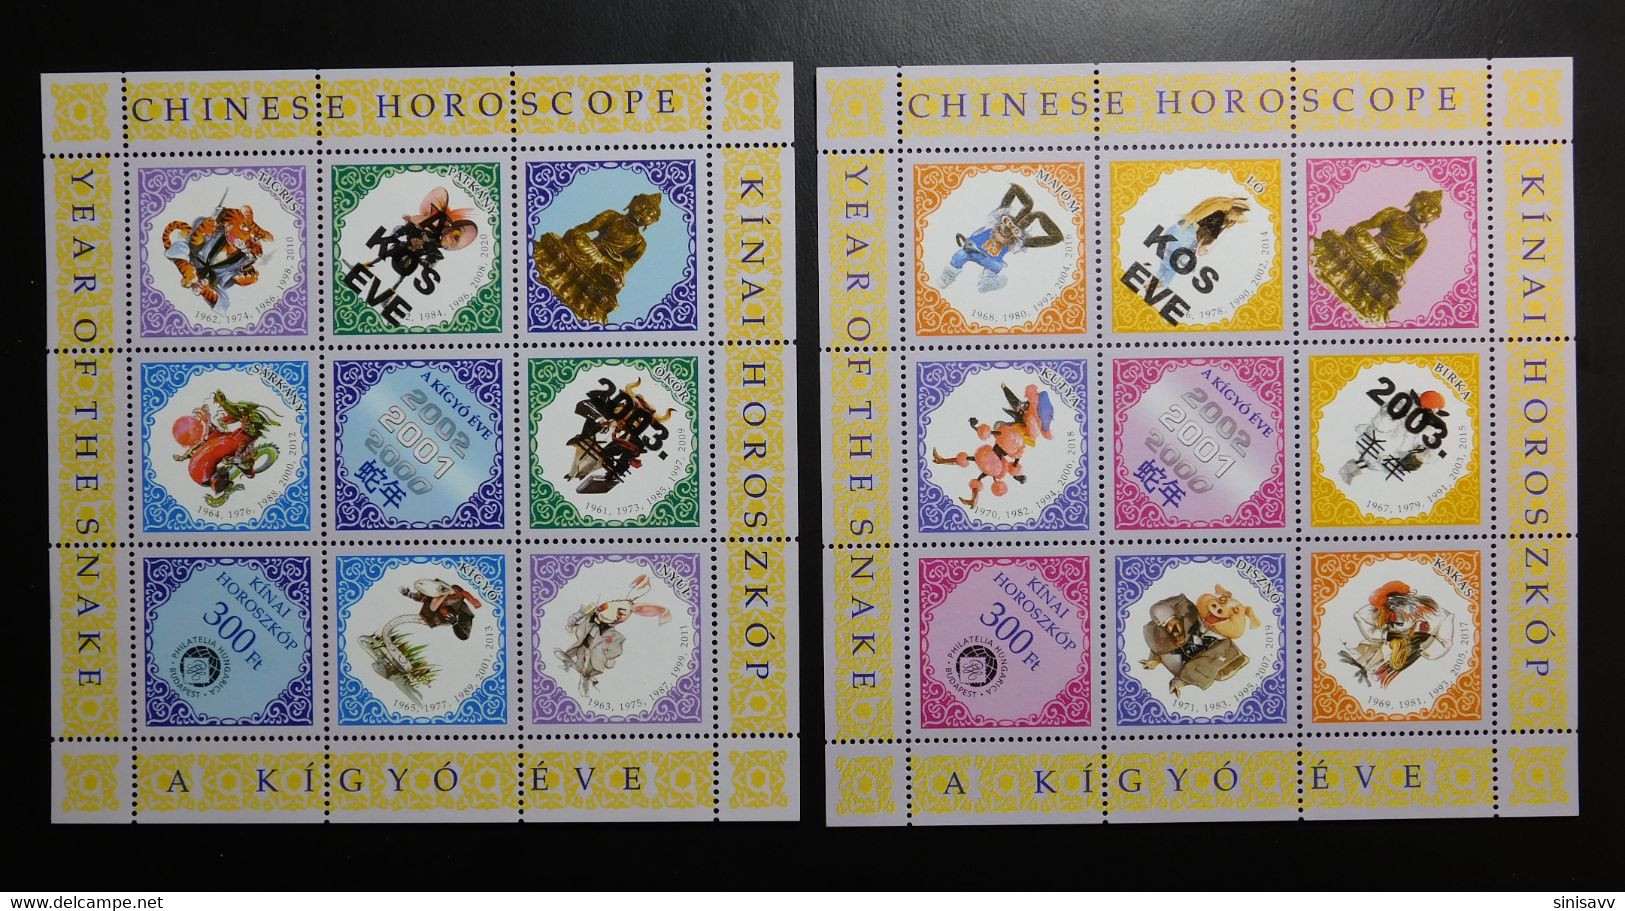 HUNGARY - 2003 - Commemorative Sheet Pair - Chinese Horoscope / Year Of The Ram MNH! - Hojas Conmemorativas